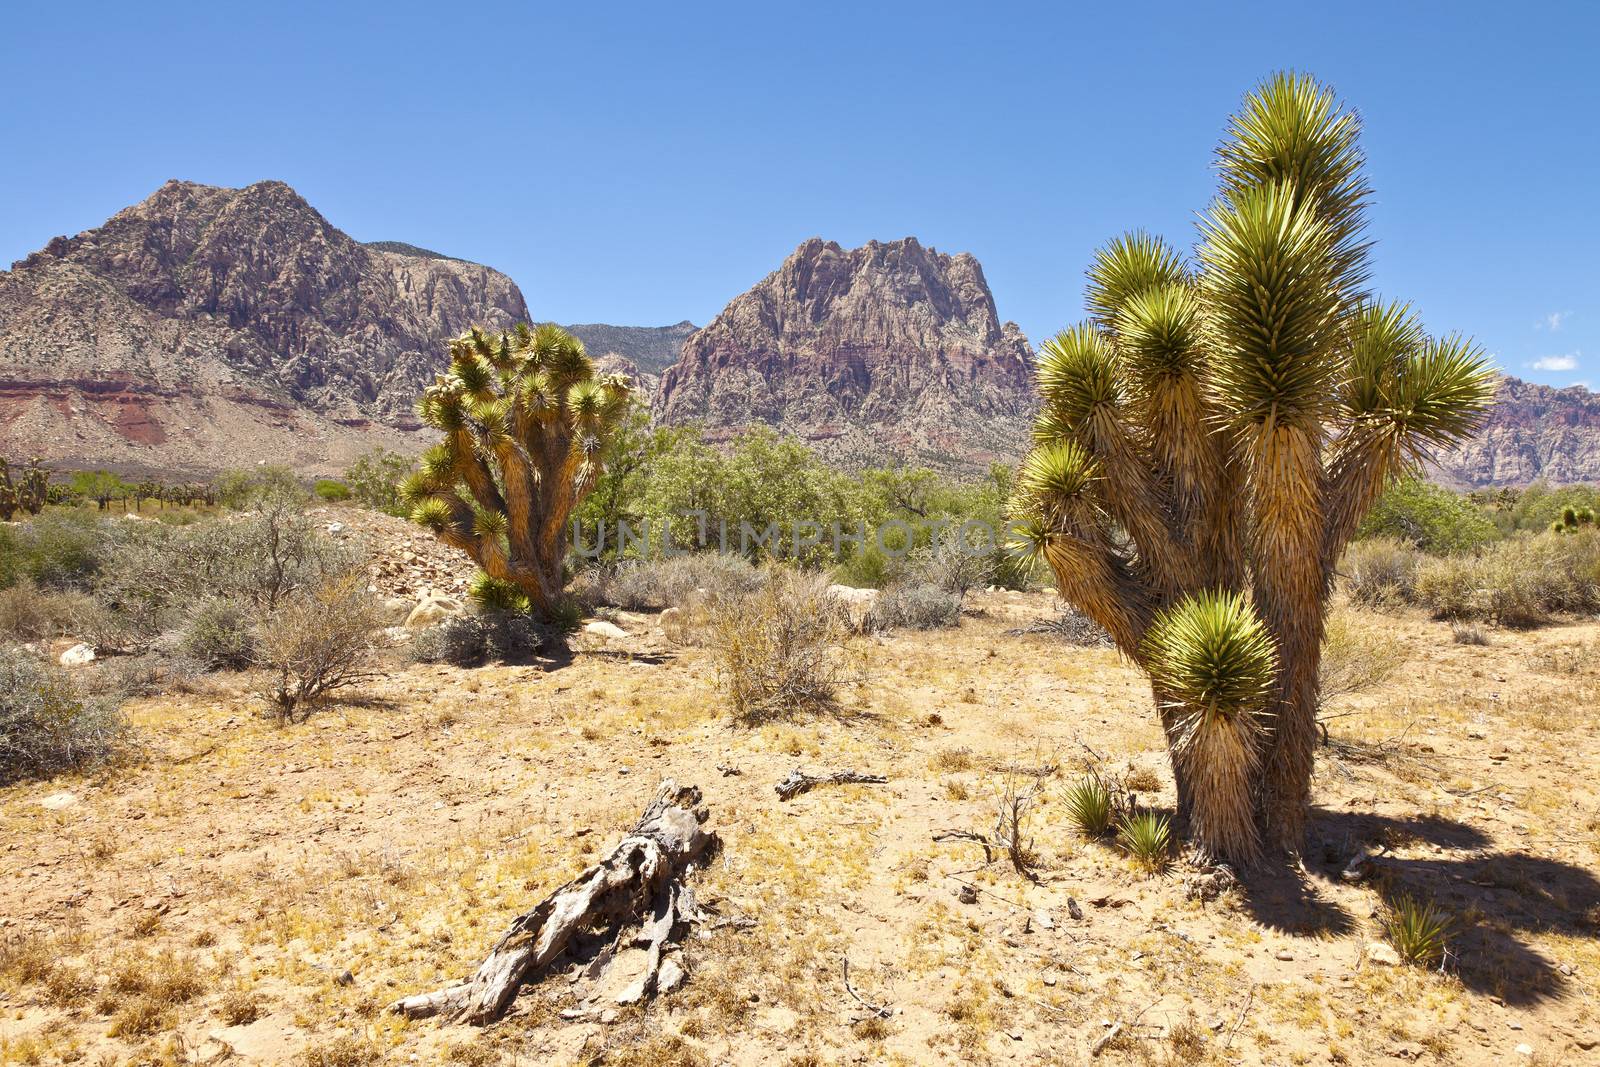 Red Rock Canyon landscape near Las Vegas Nevada.